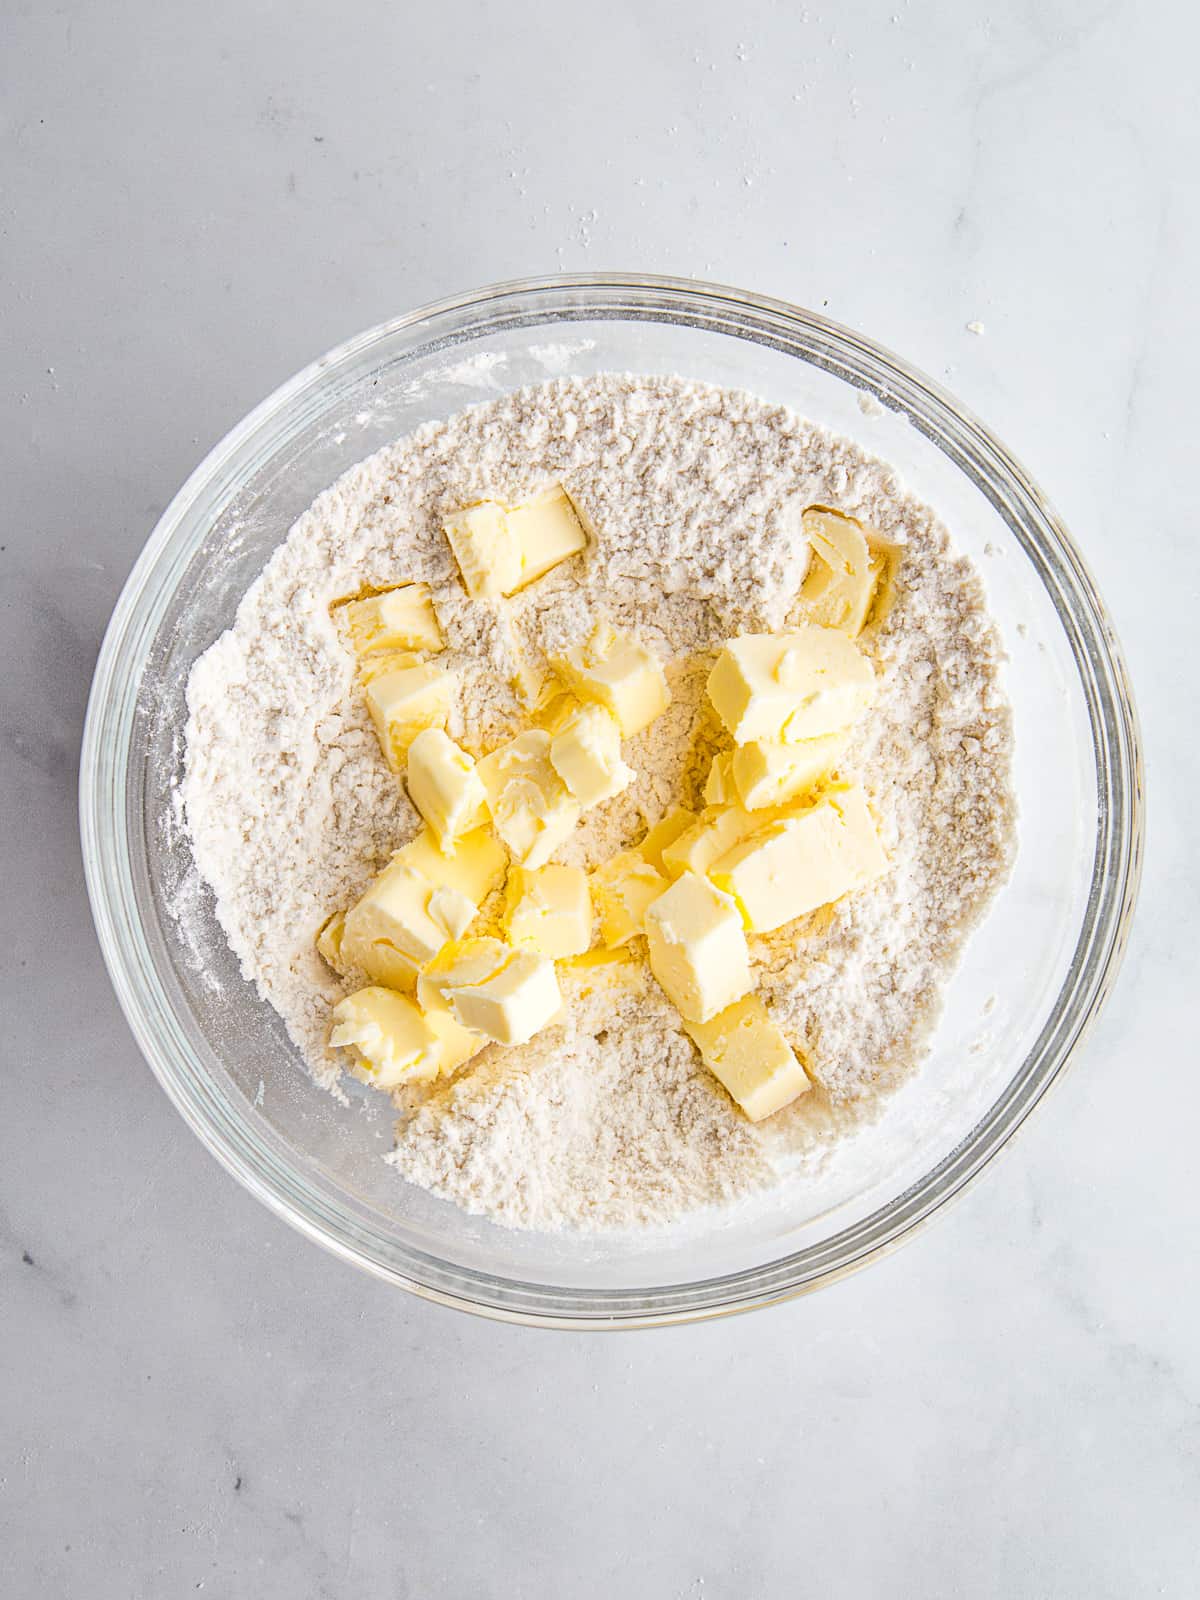 Butter cubes on gluten-free flour for a pie crust recipe